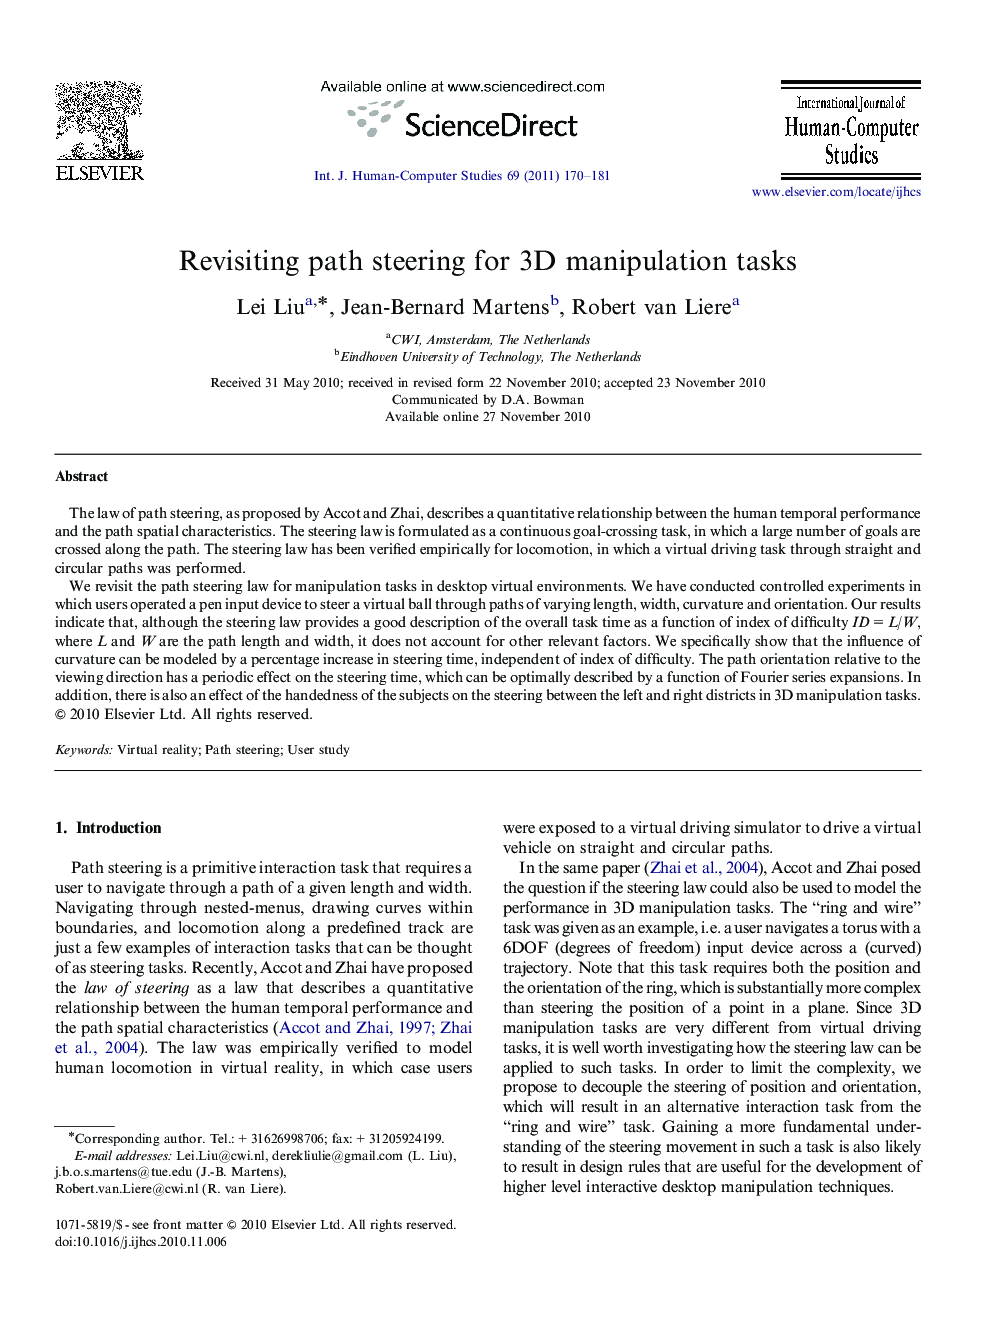 Revisiting path steering for 3D manipulation tasks